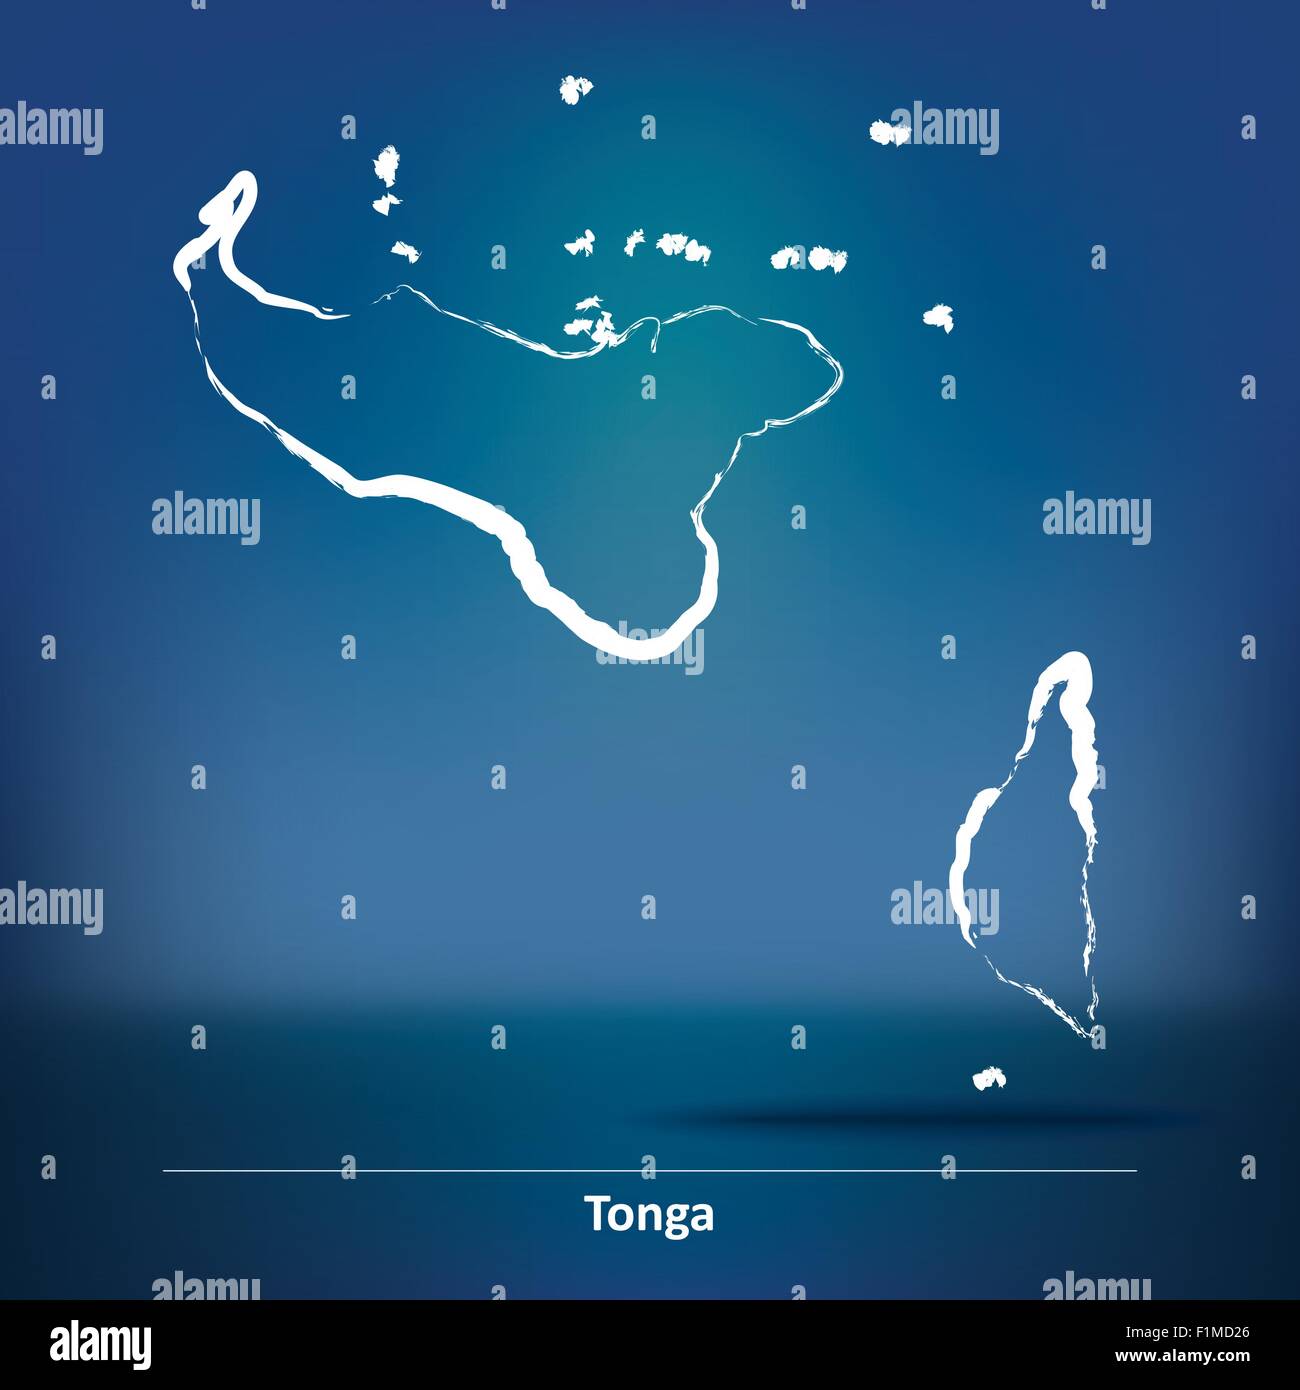 Karte von Tonga - Vektor-Illustration Doodle Stock Vektor